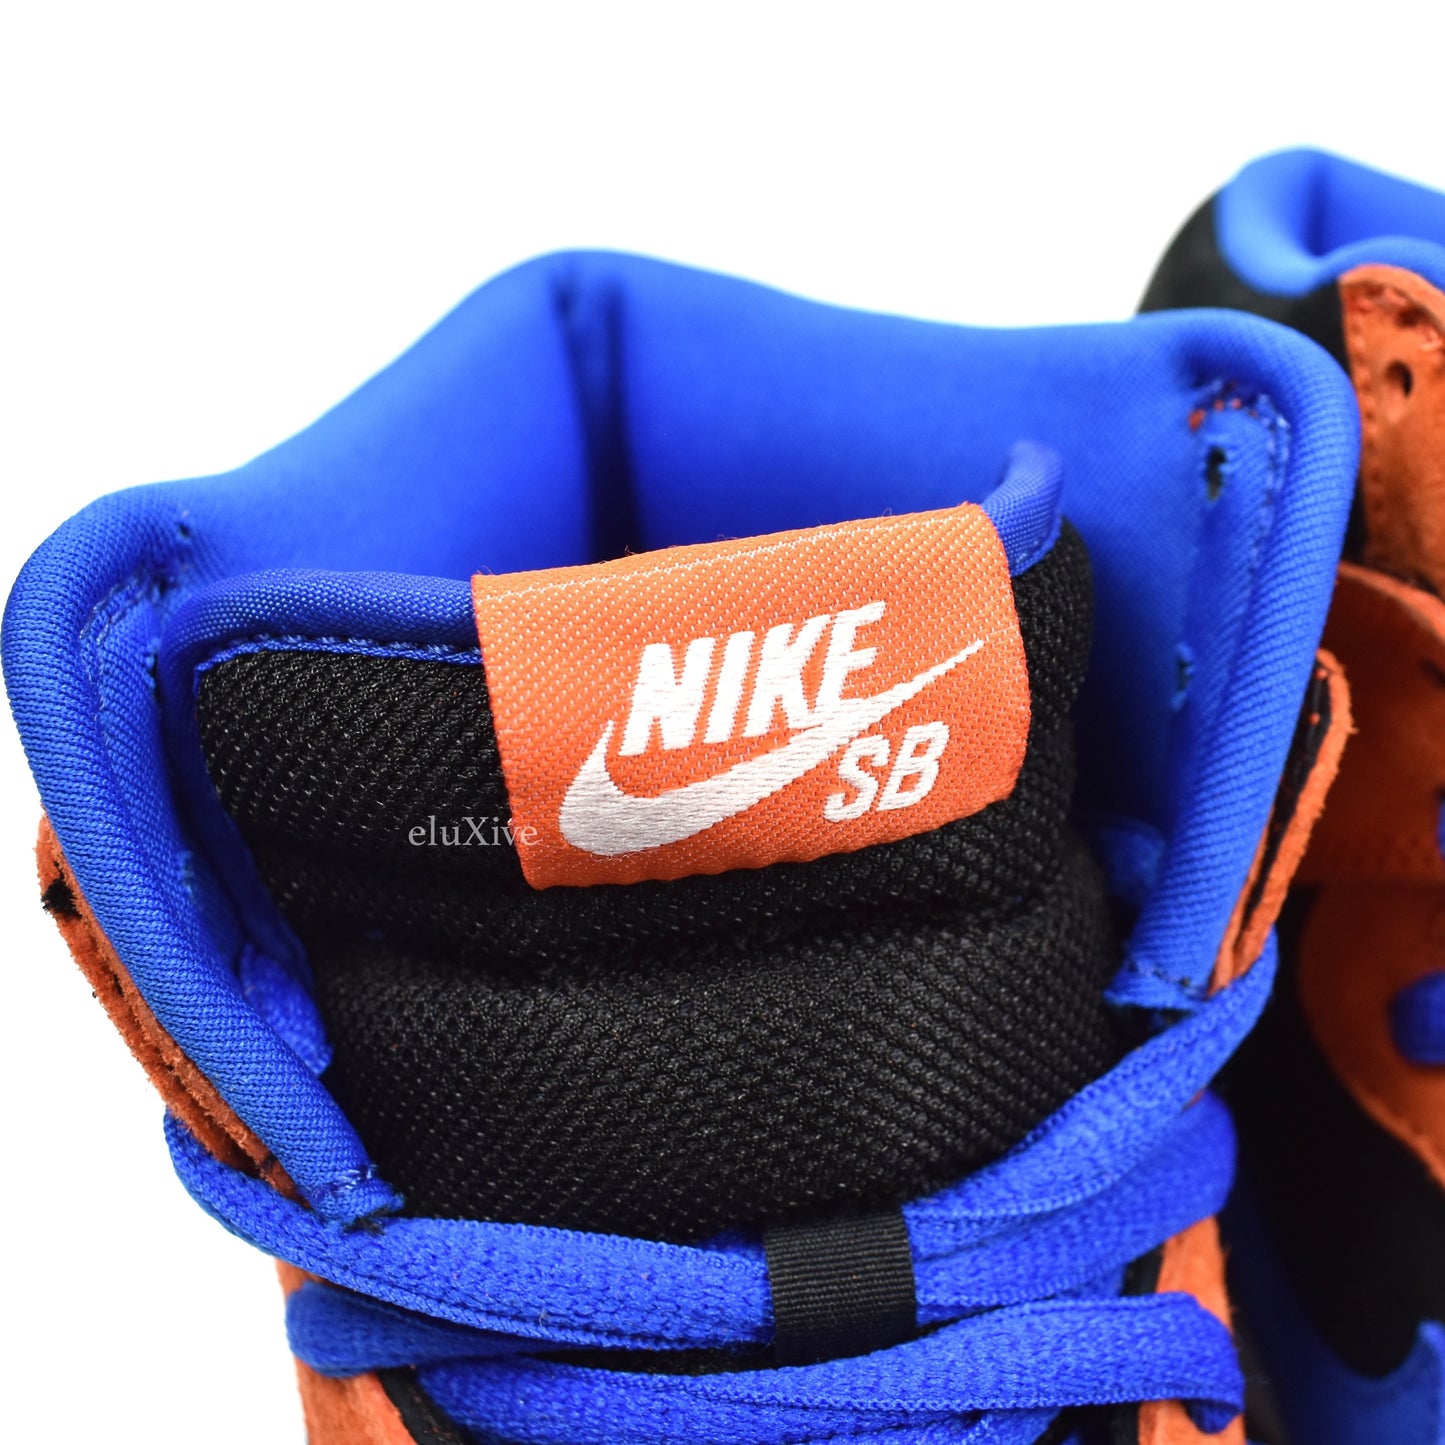 Nike - Dunk High Premium SB 'Knicks'